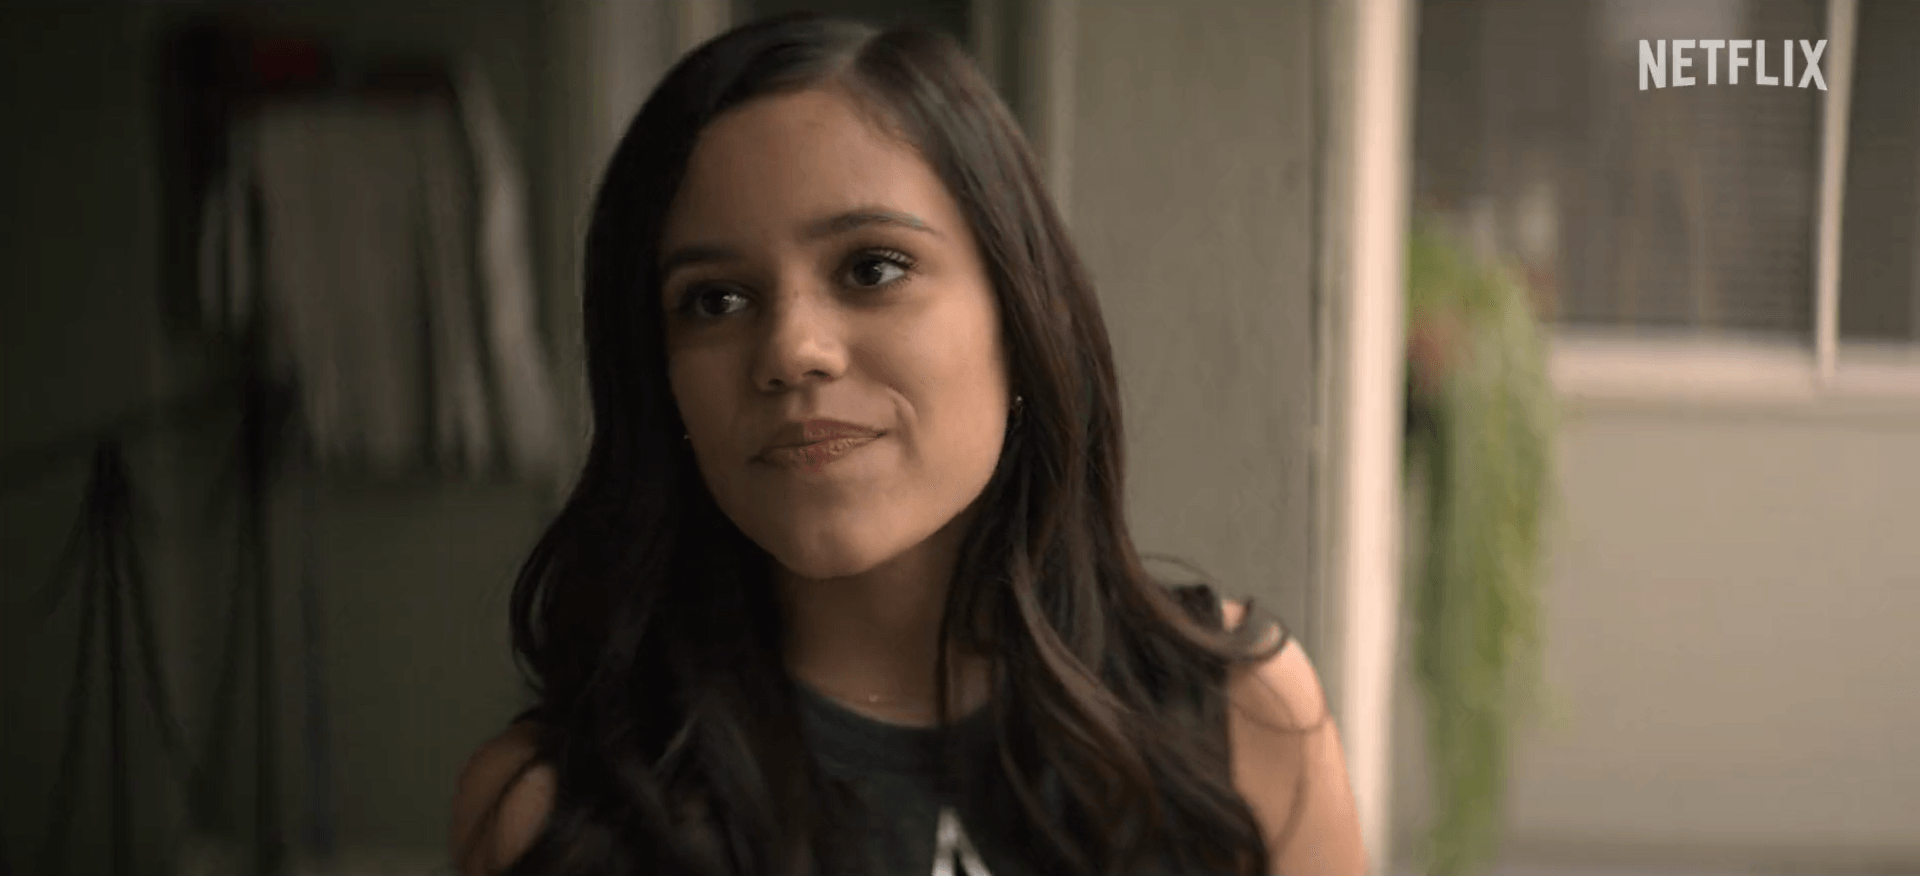 LOOK: Netflix’s ‘You’ teases return of Jenna Ortega in season 5